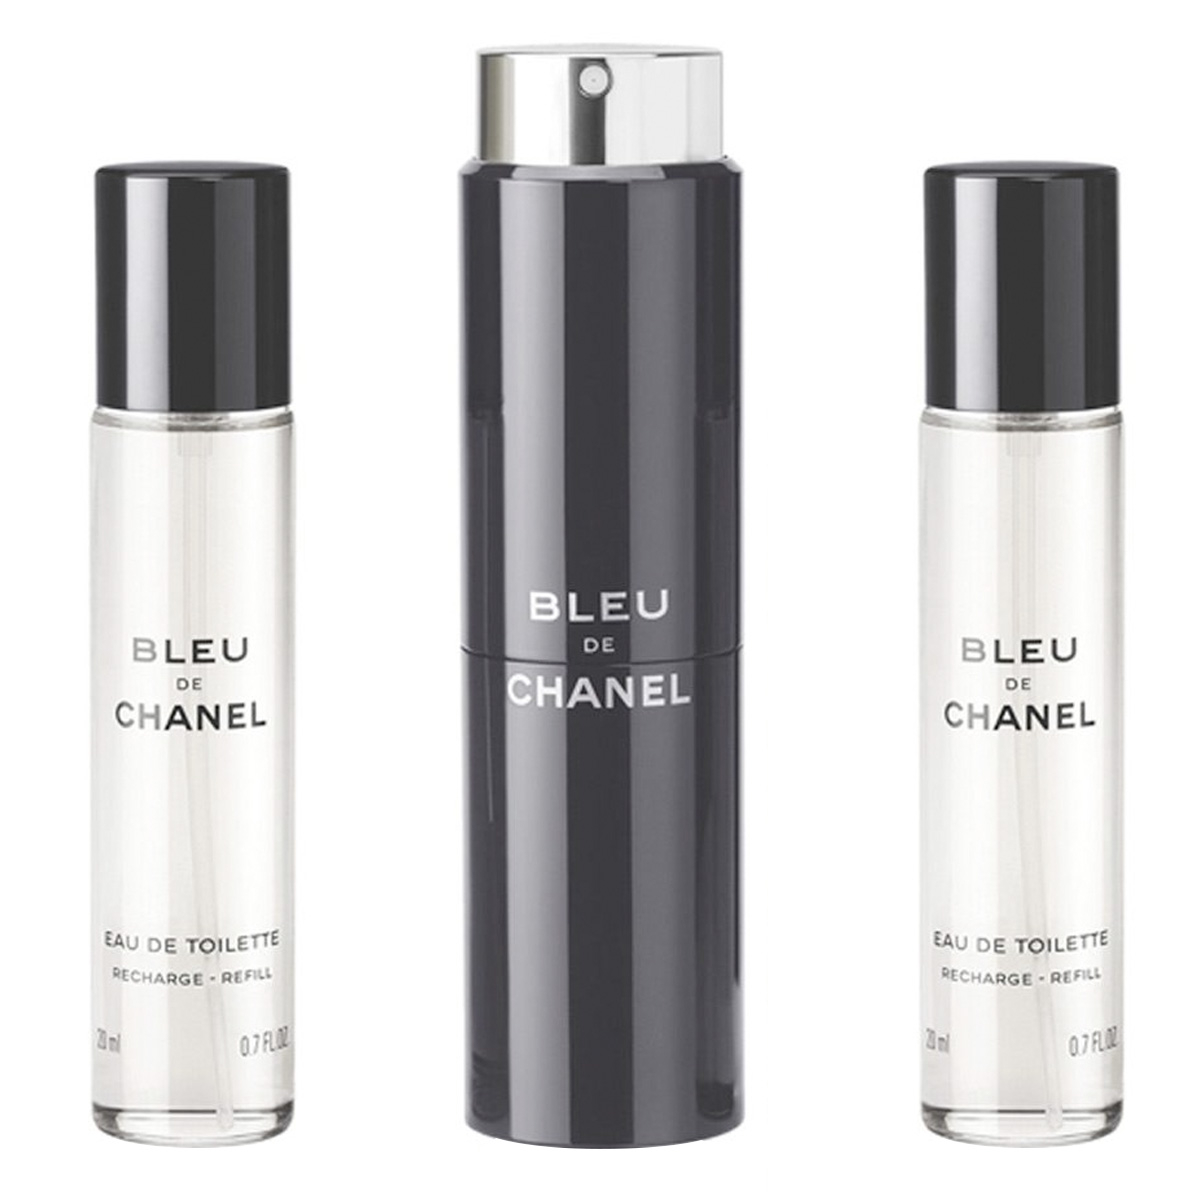 Chanel Bleu de Chanel Eau de Parfum Travel Spray 20ml + 2 X 20ml Refills